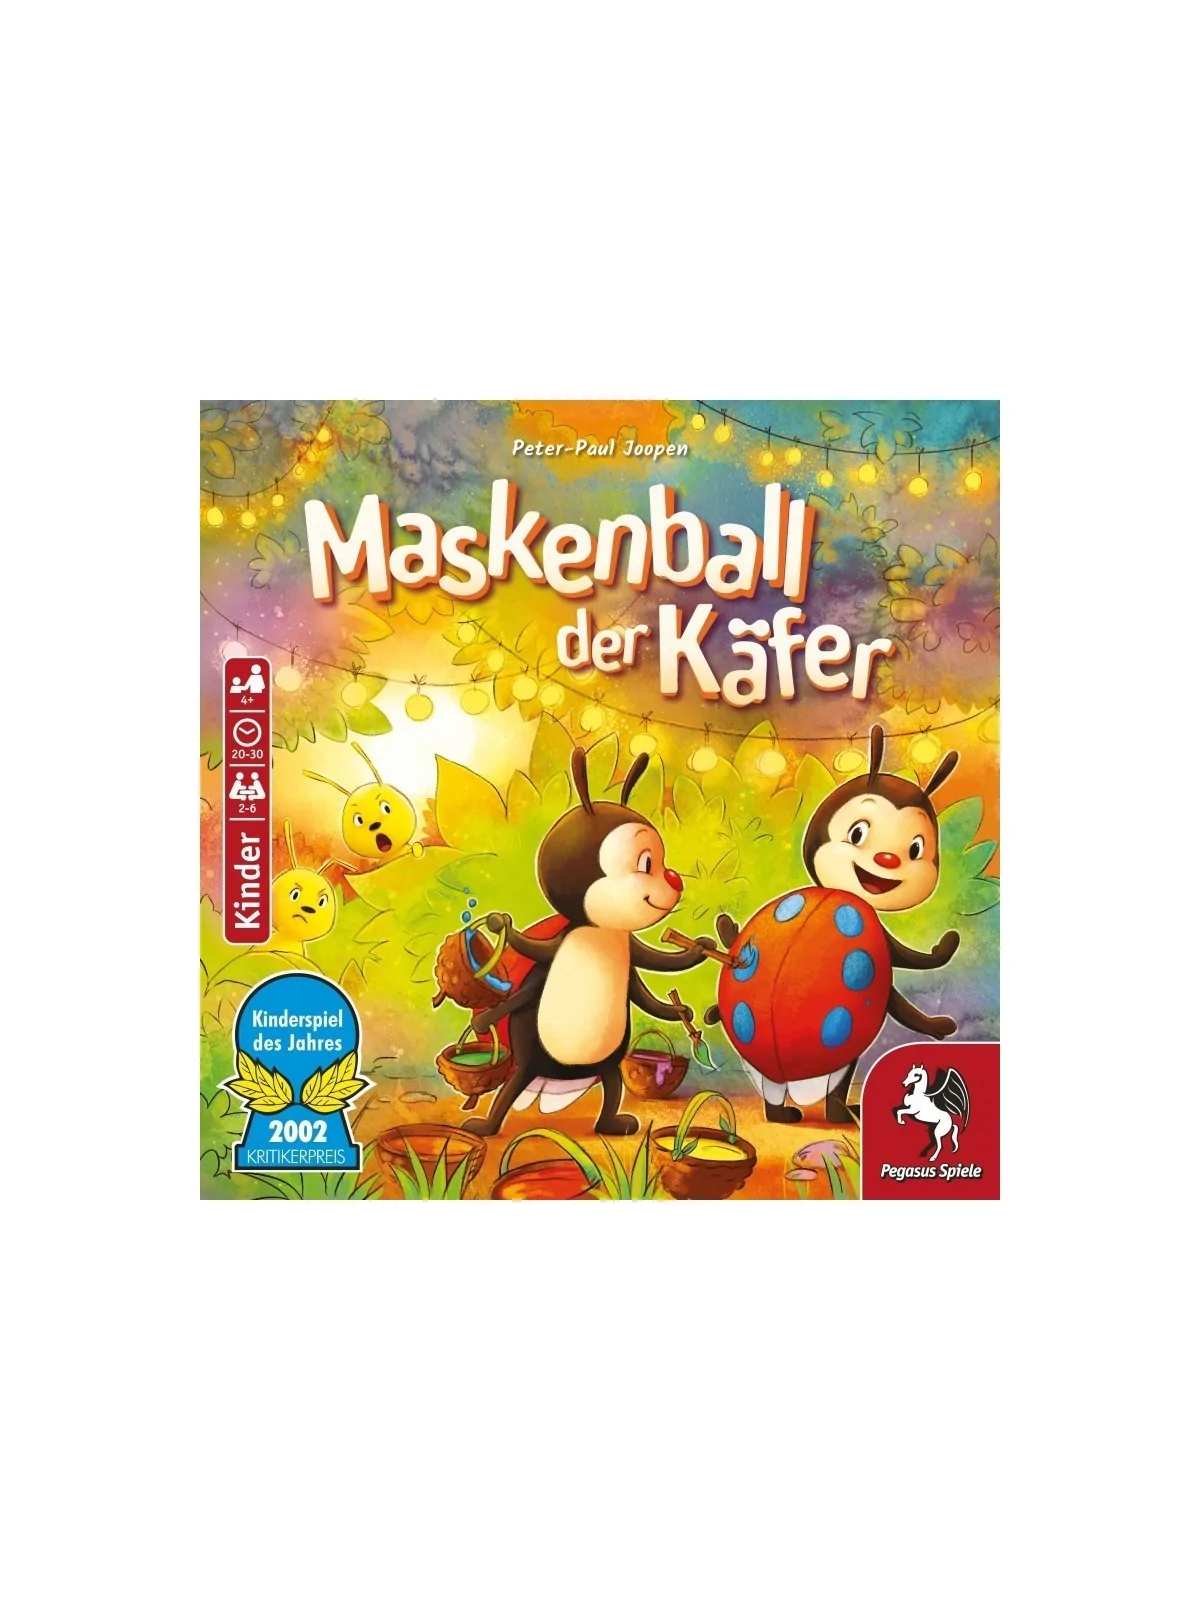 Comprar Maskenball Der Käfer New Edition (Inglés) barato al mejor prec